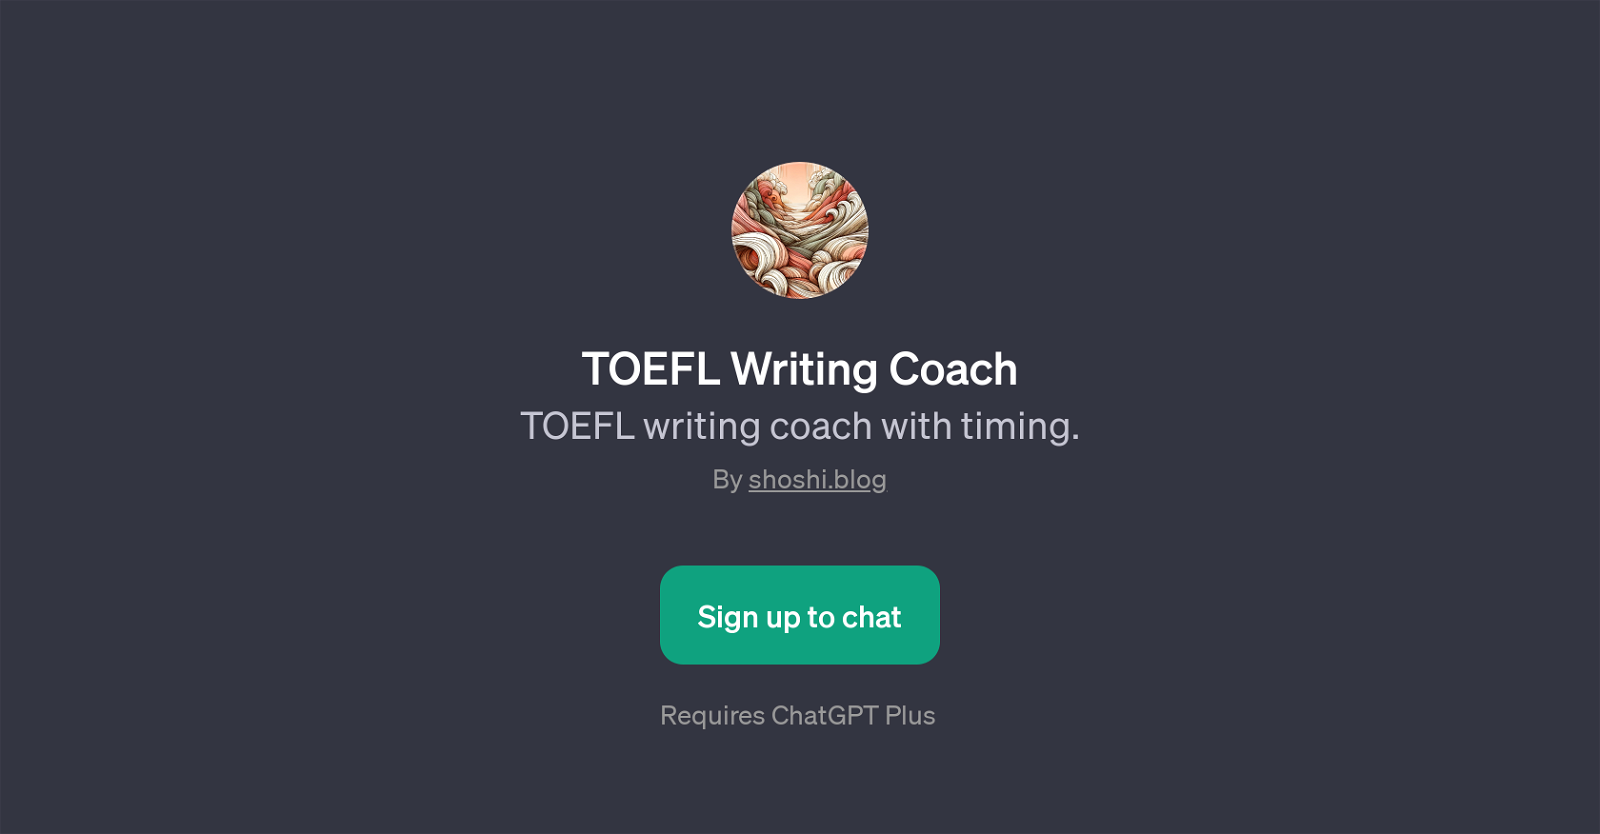 TOEFL Writing Coach website